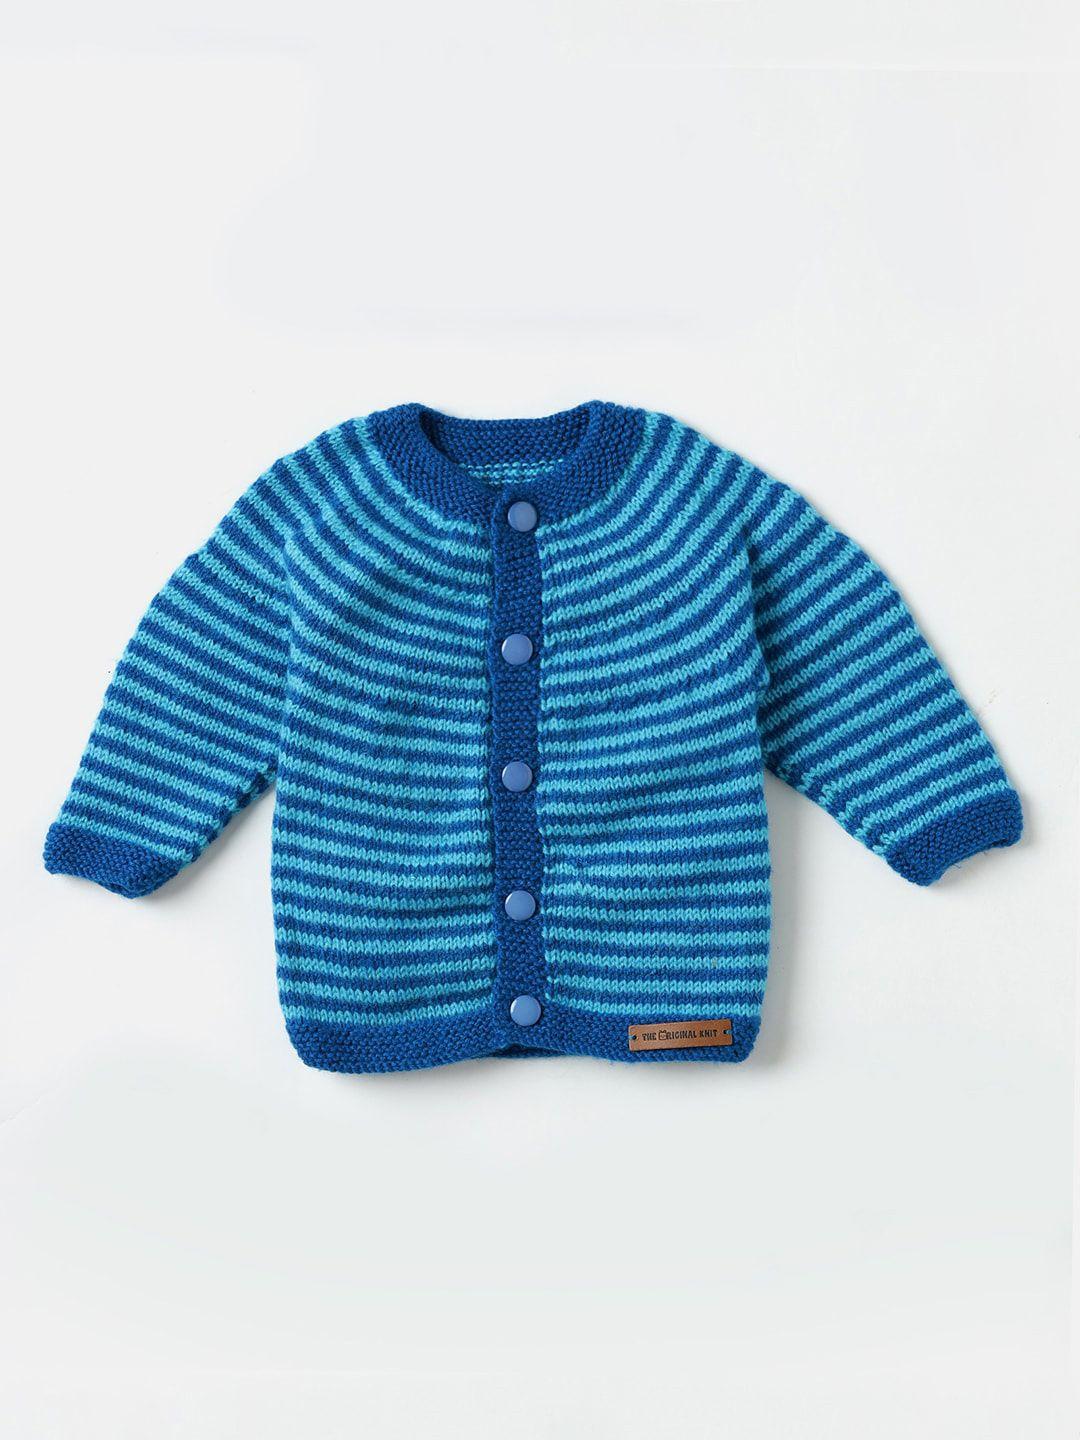 the original knit unisex kids blue striped cardigan